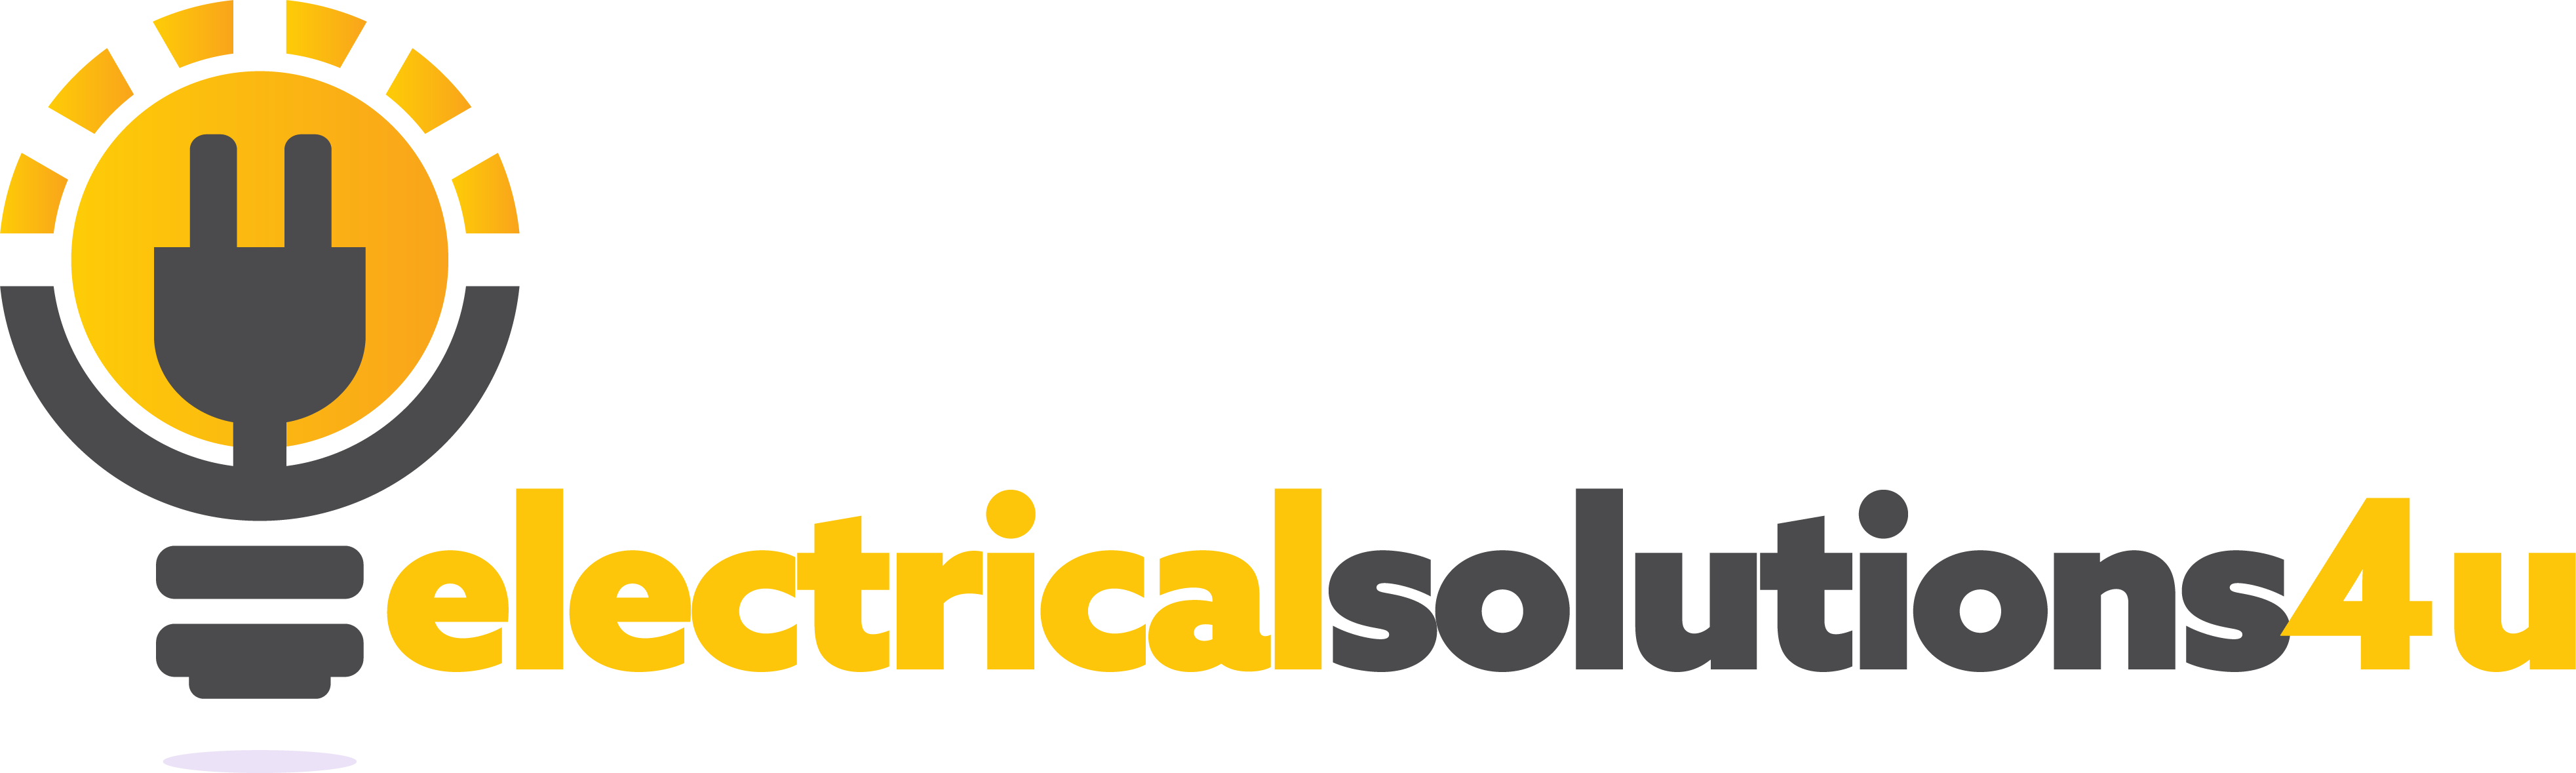 electrical solutions 4u logo